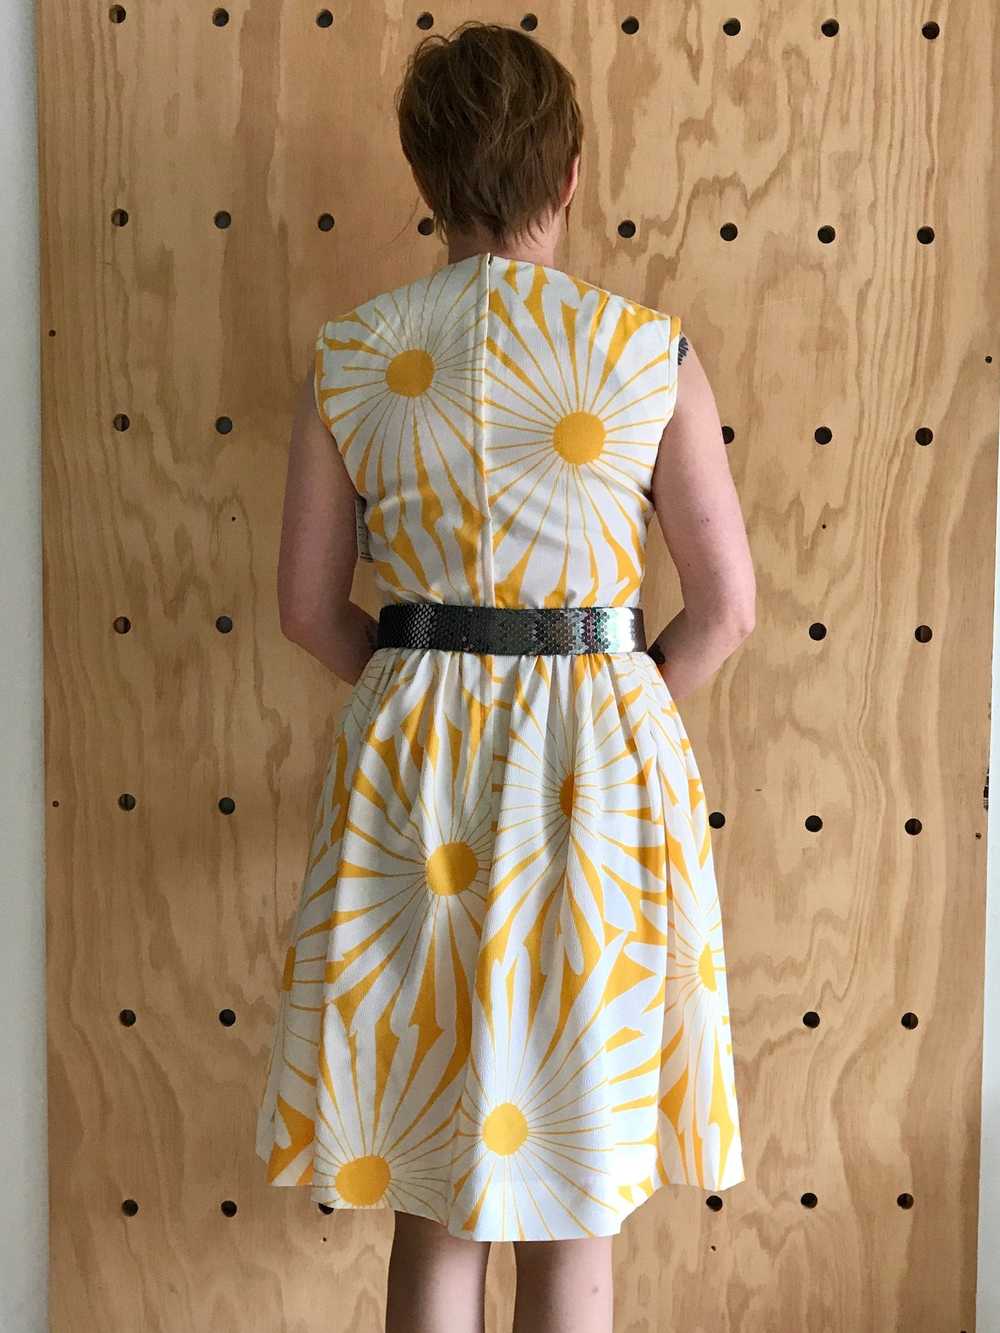 1960s Daisy Print Dress (M) - image 2